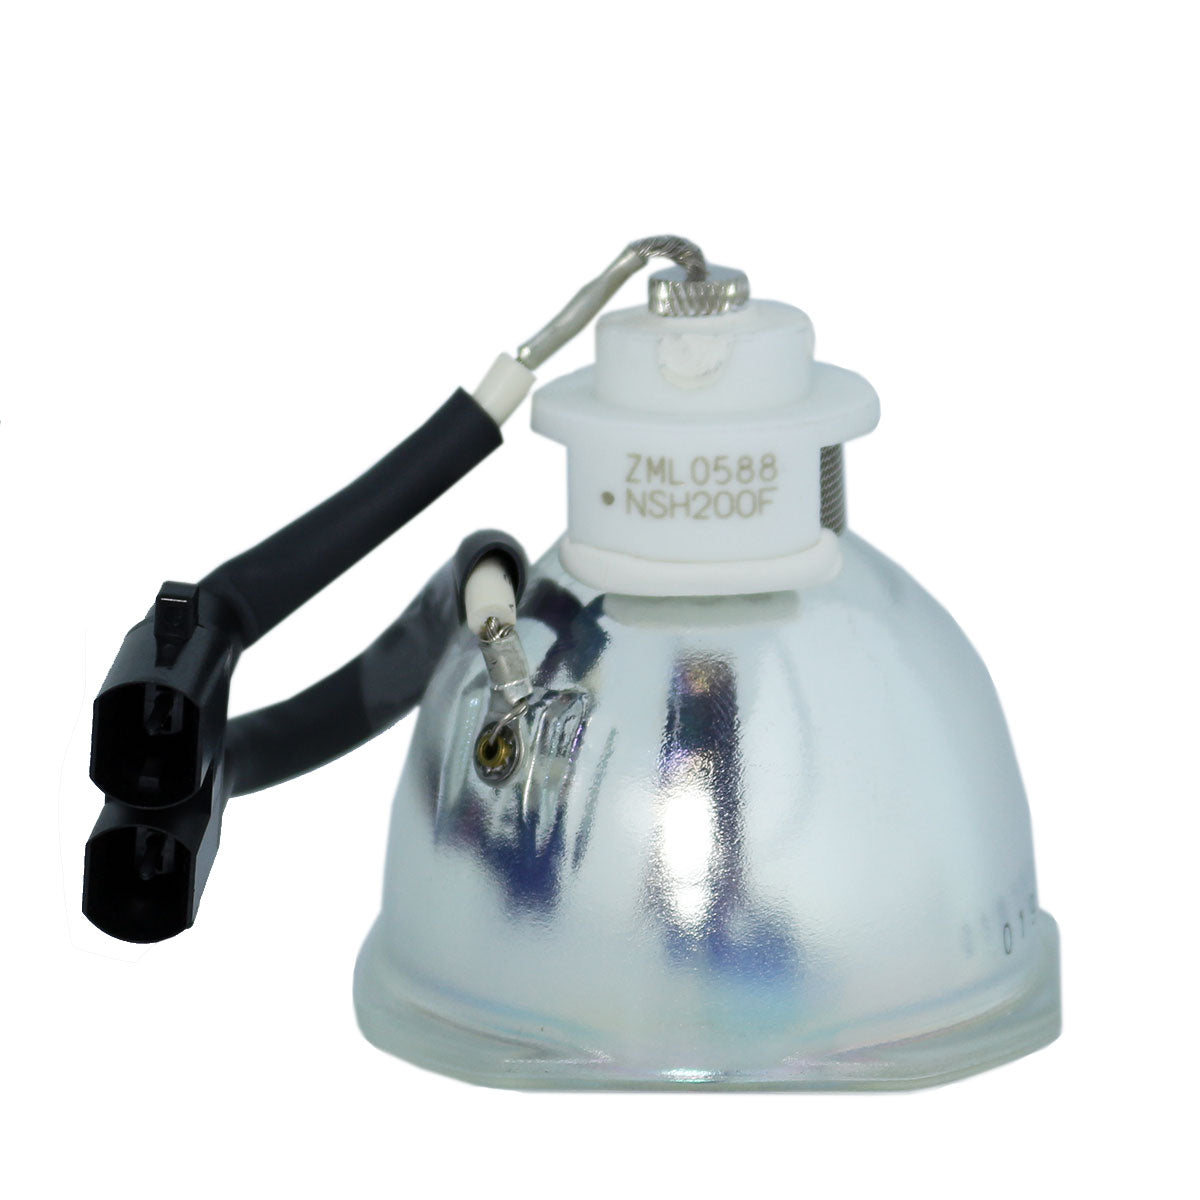 PLUS U5-200 Ushio Projector Bare Lamp